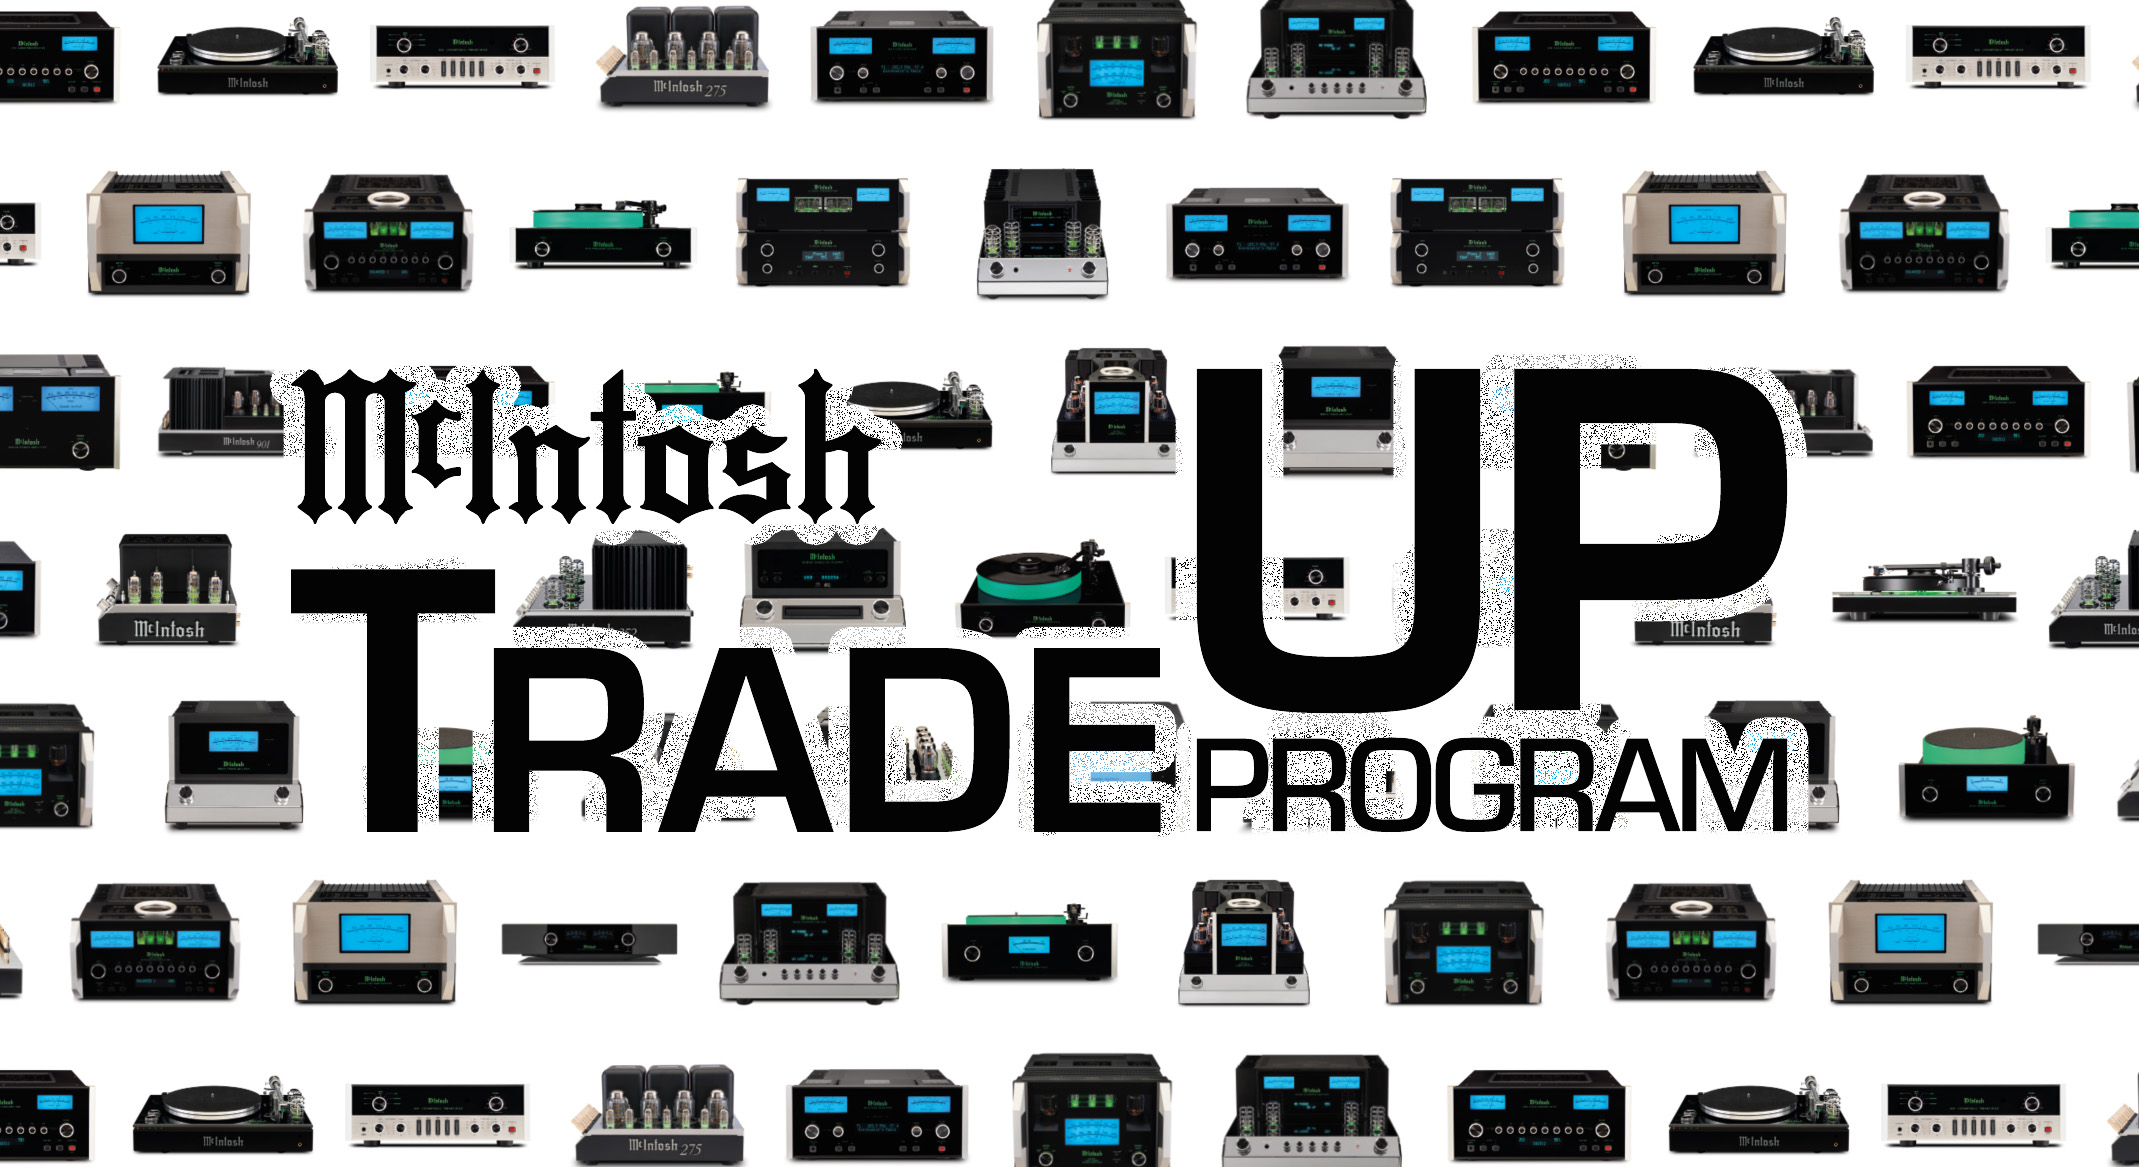 McIntosh TradeUp Programm - Aktion verlängert